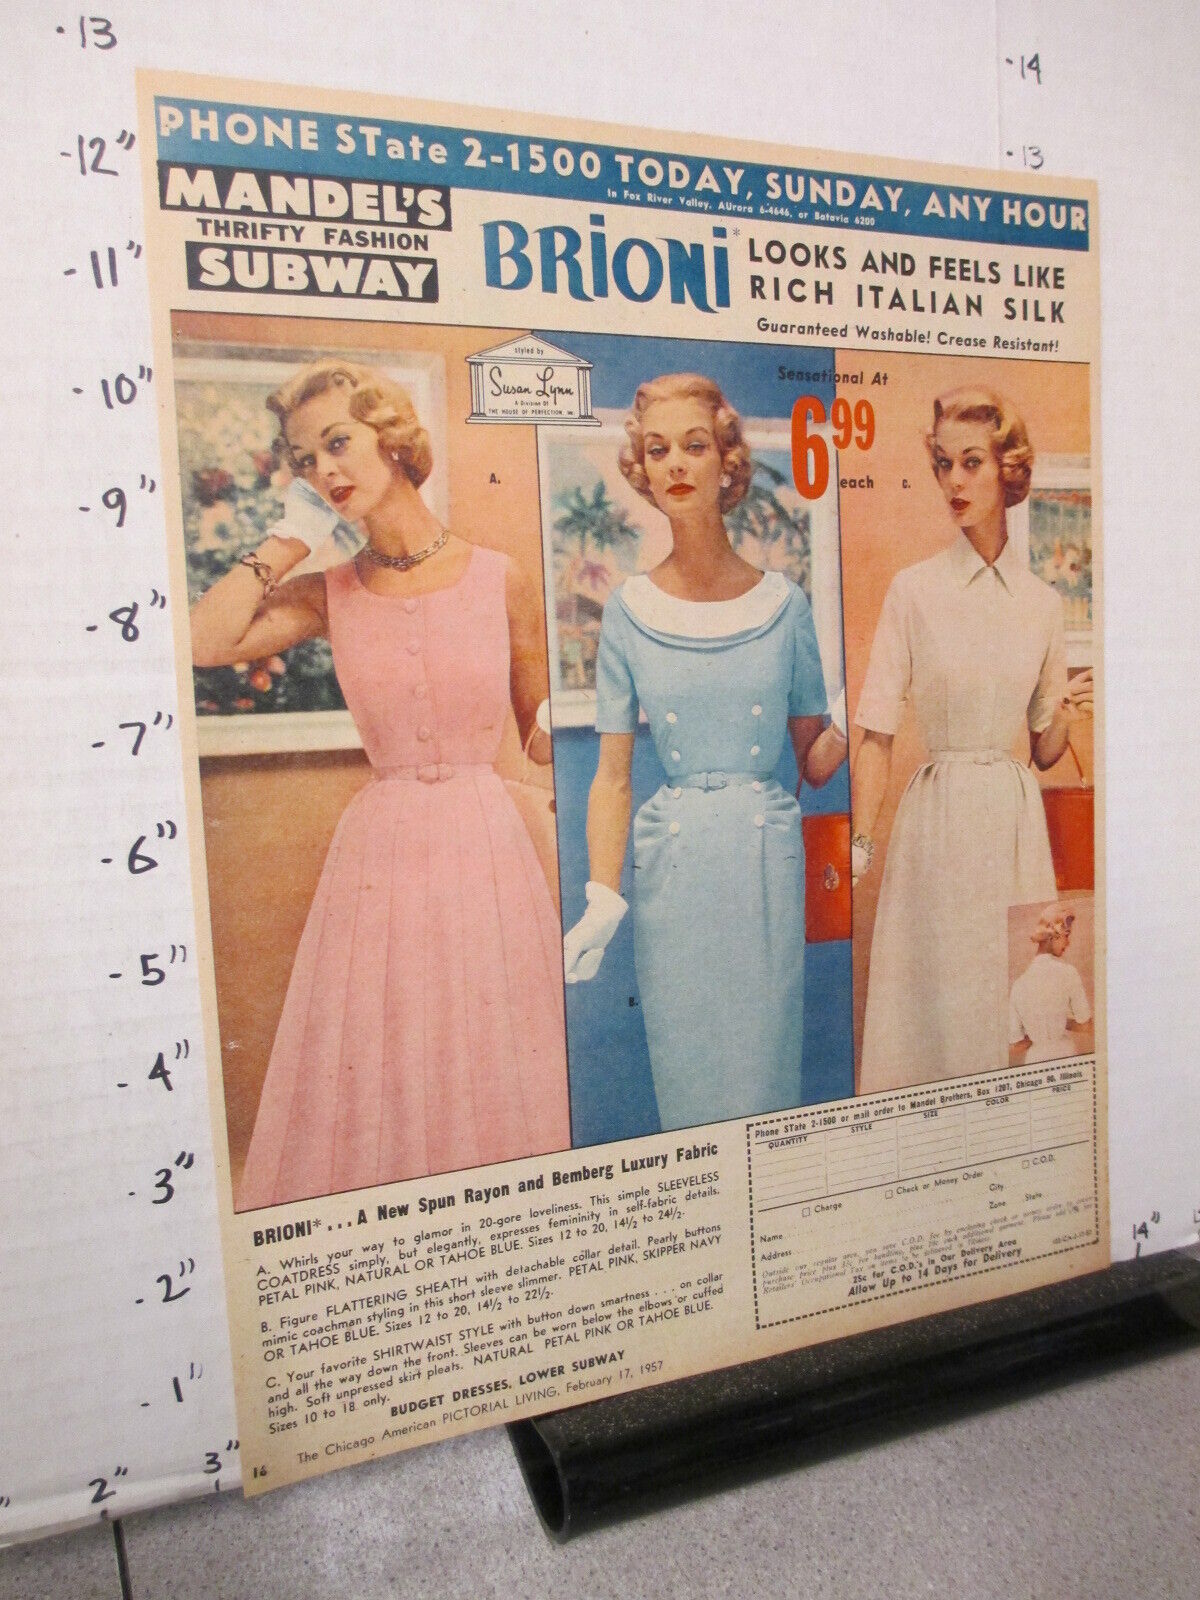 newspaper ad 1957 MANDEL'S SUBWAY women's clothing dress Brioni Italian silk